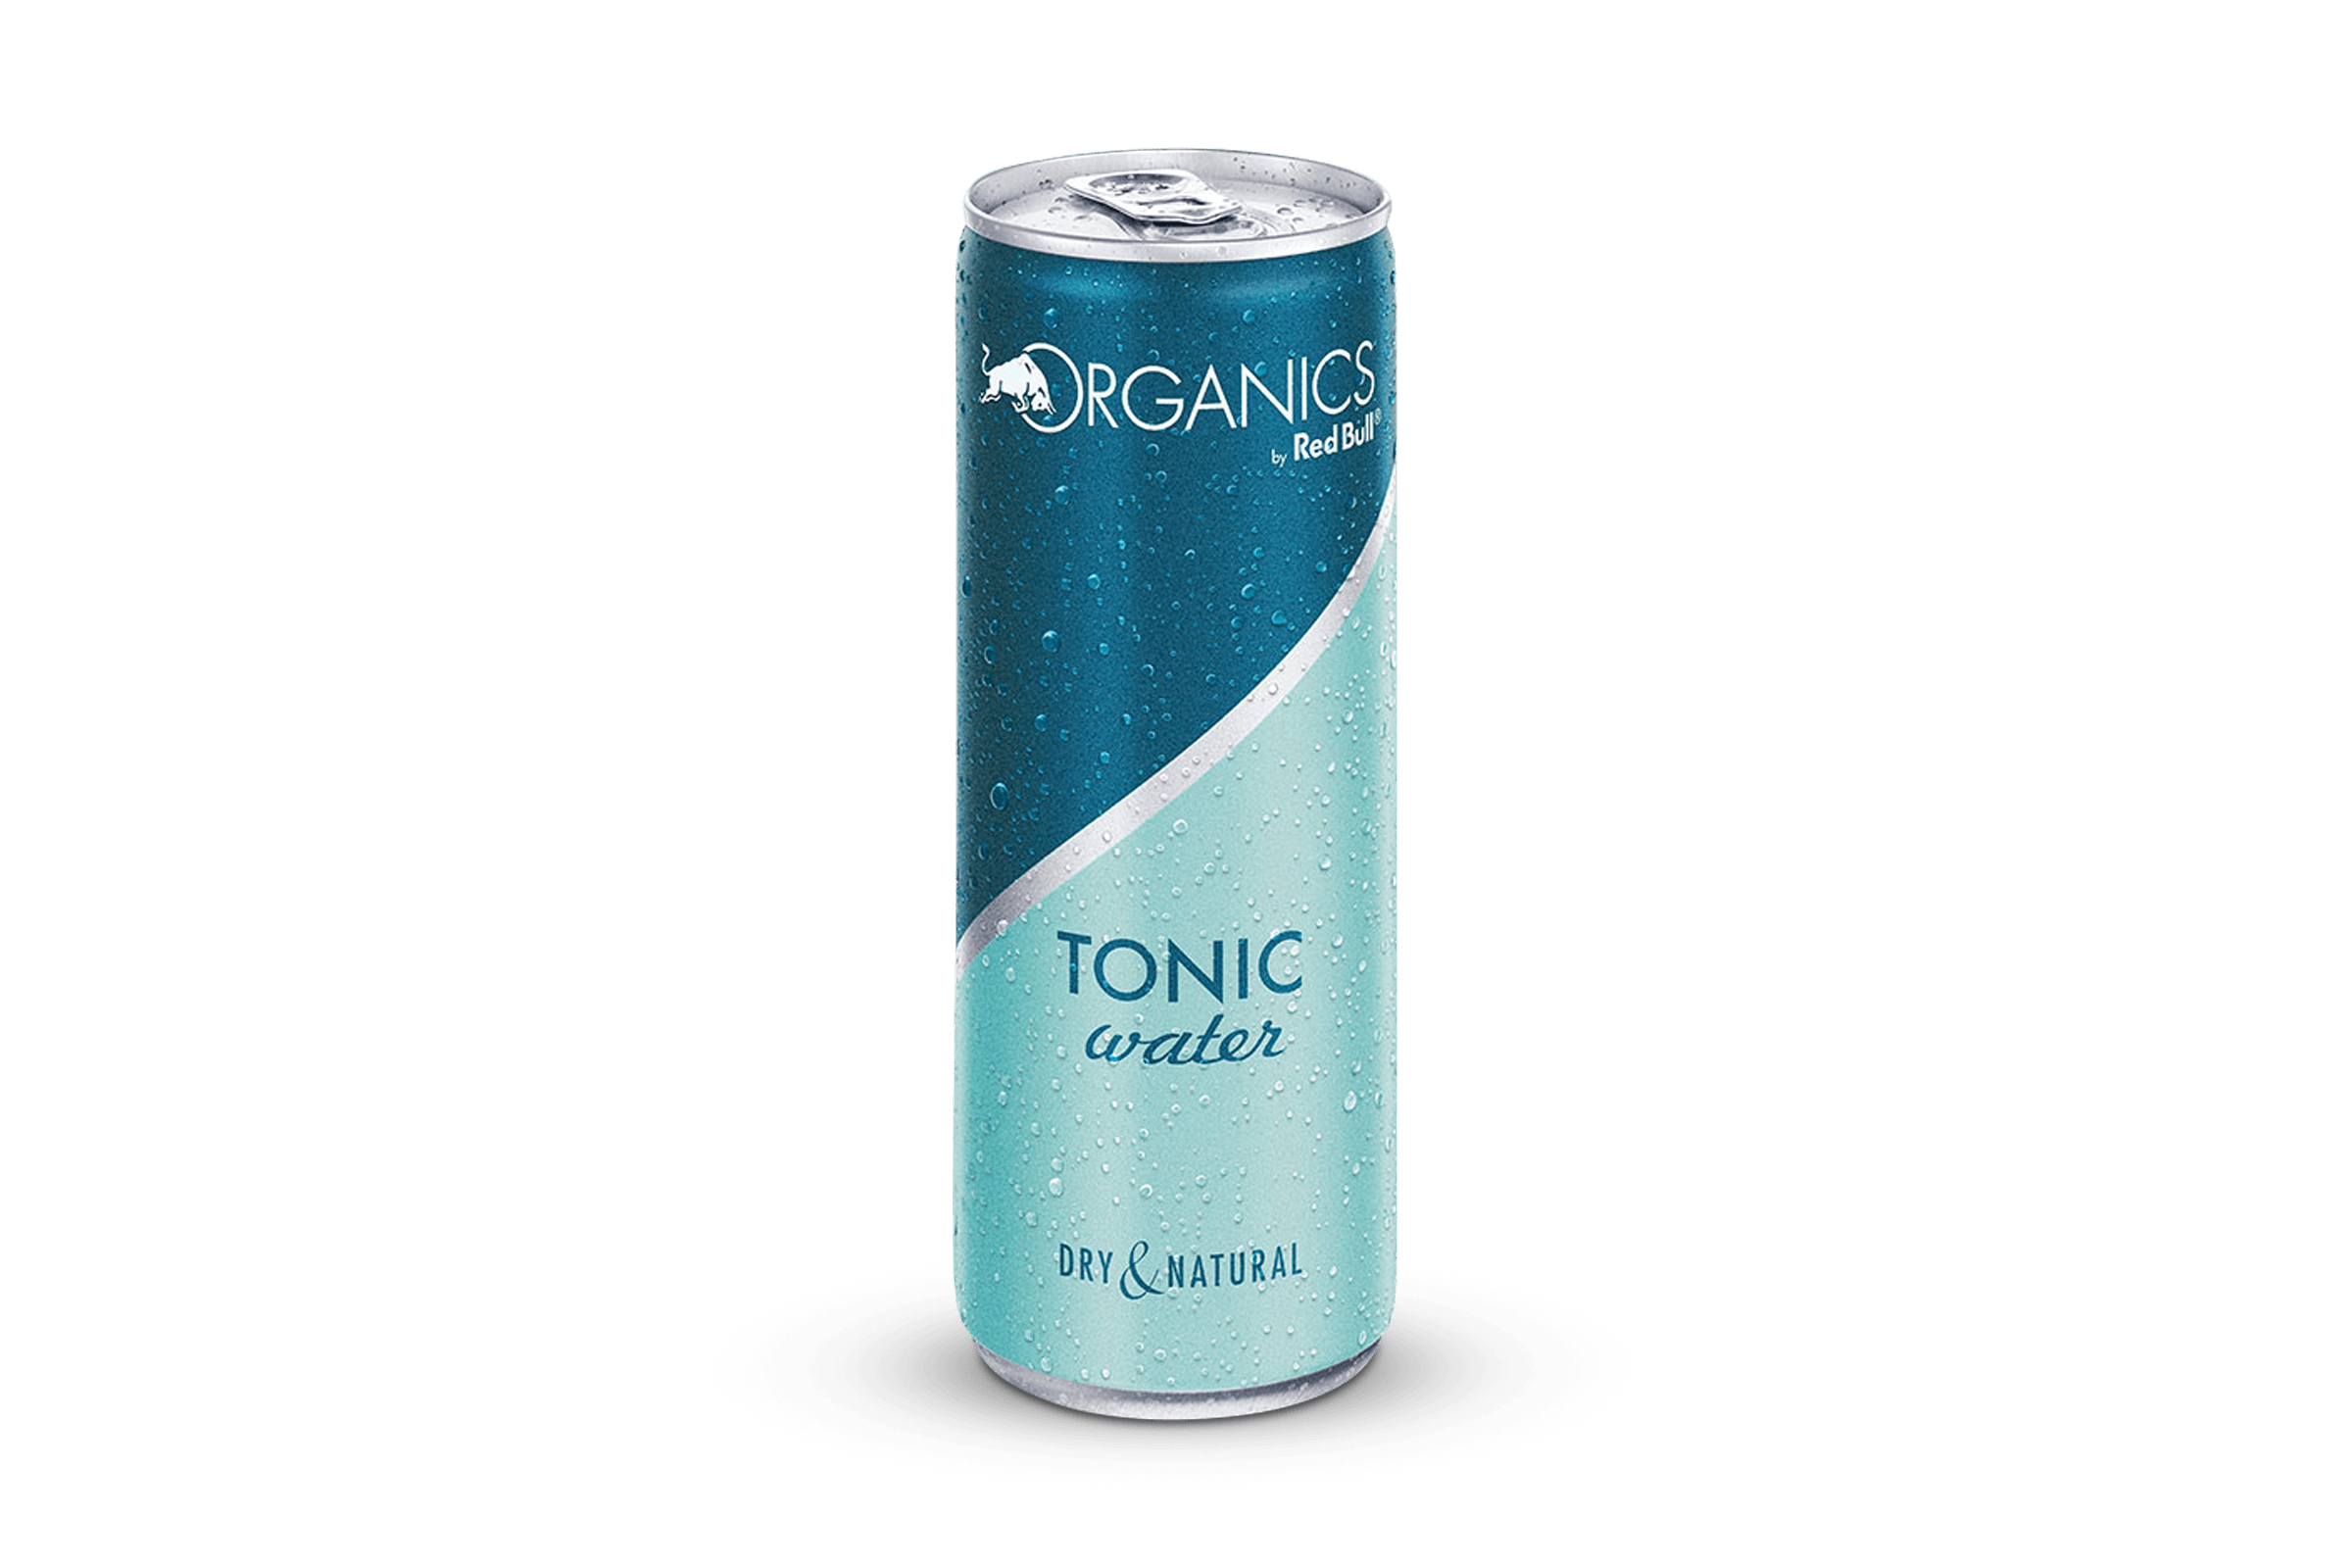 Red Bull Tonic Water 1